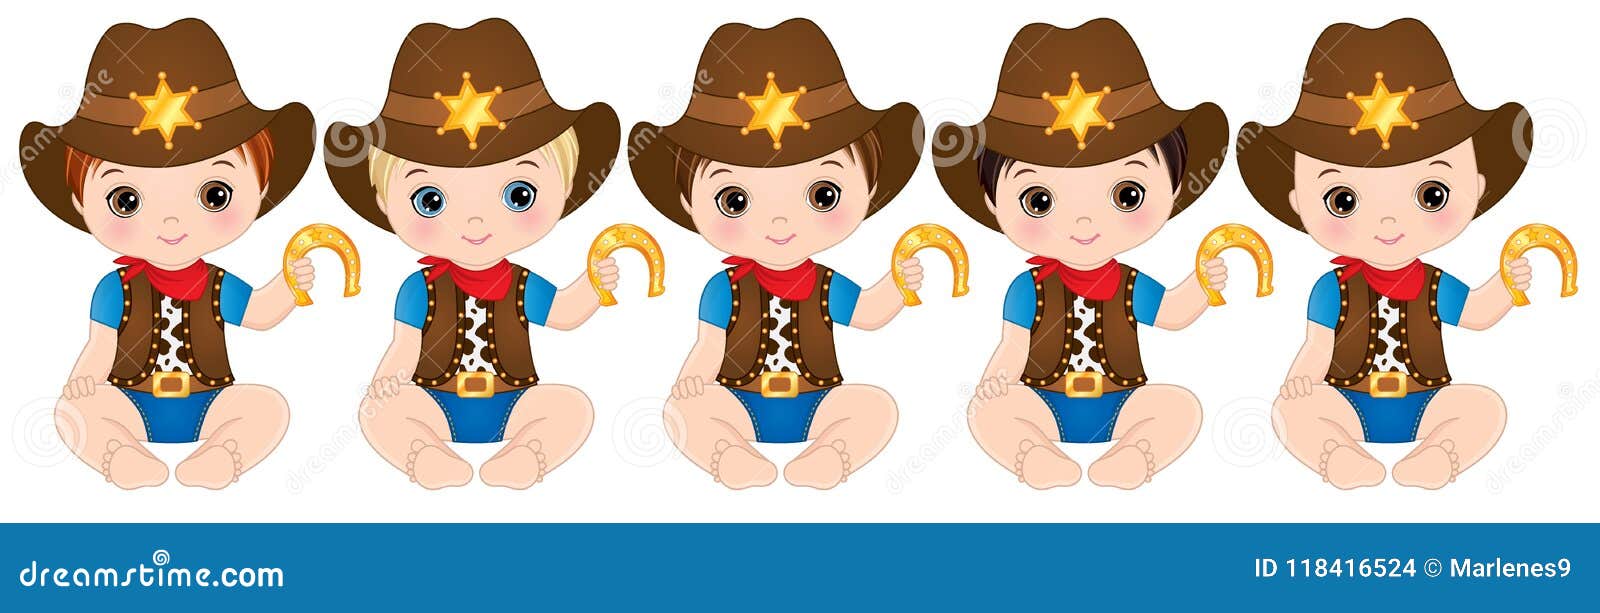  cute little baby boys dressed as cowboys